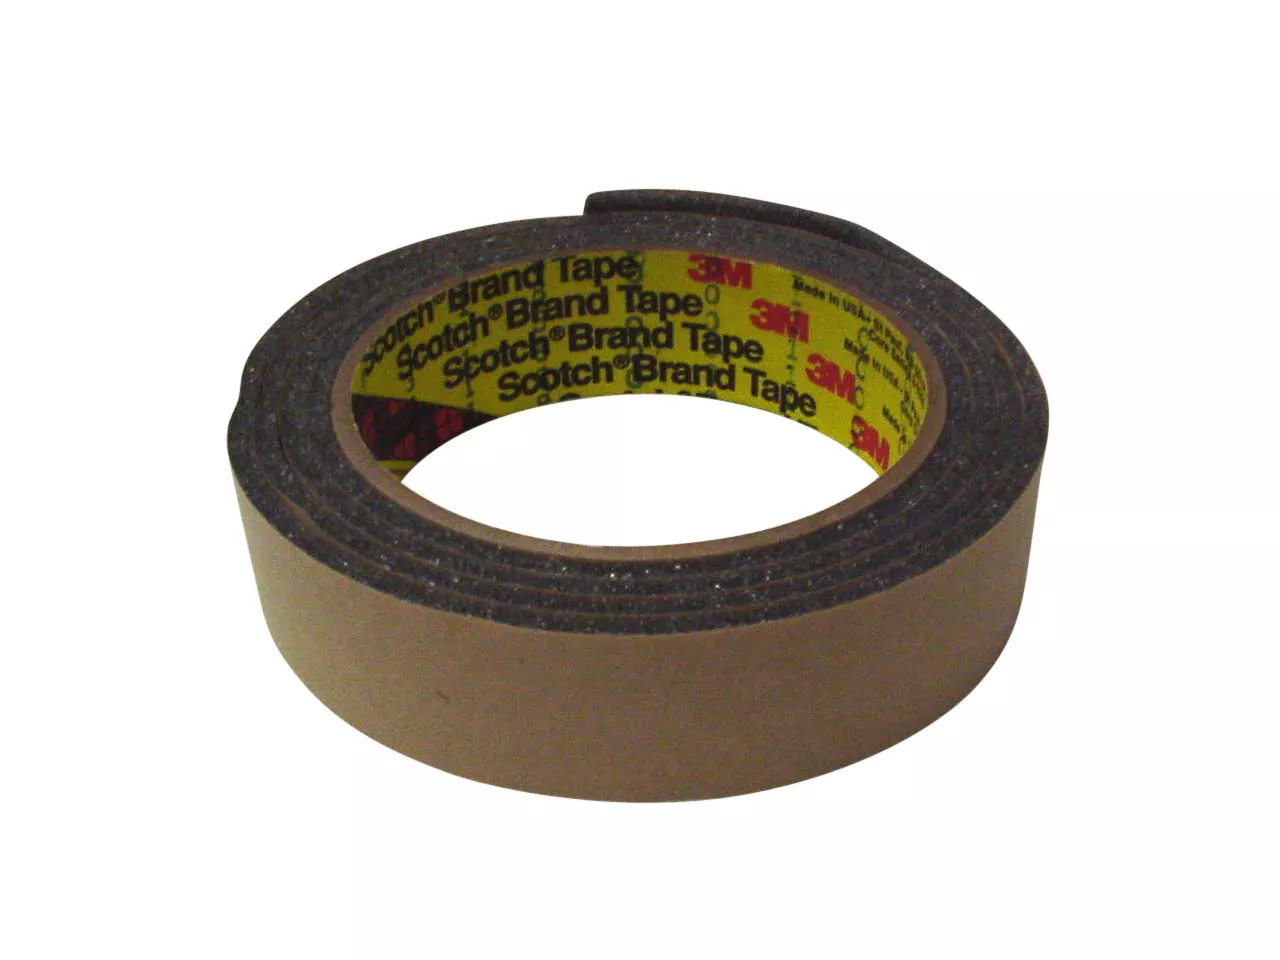 3M™ Urethane Foam Tape 4314, Charcoal, Gray, 3/4 in x 18 yd, 250 mil, 12
Roll/Case